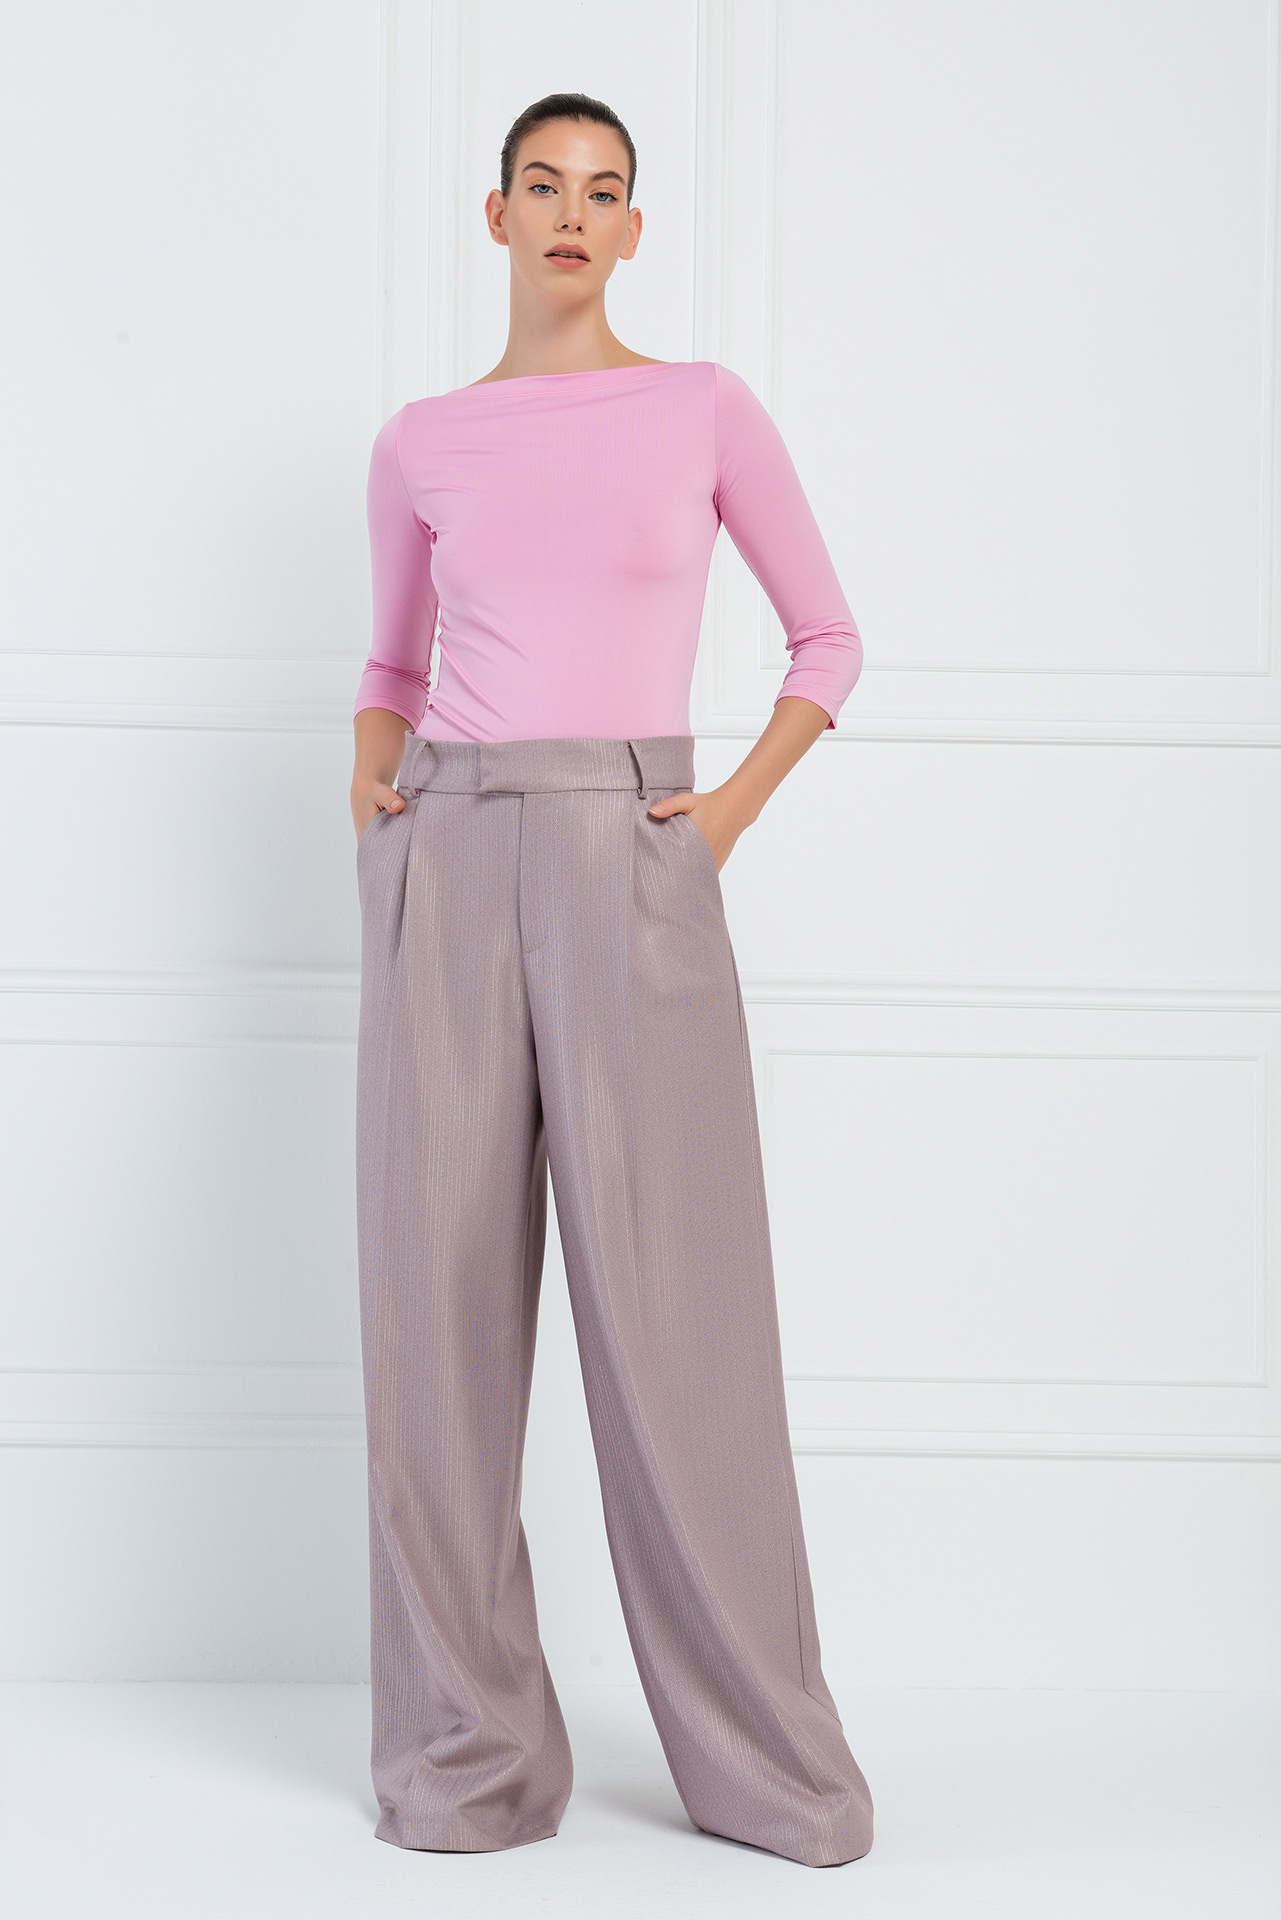 Wholesale New Pink Three-Quarter Sleeve Top